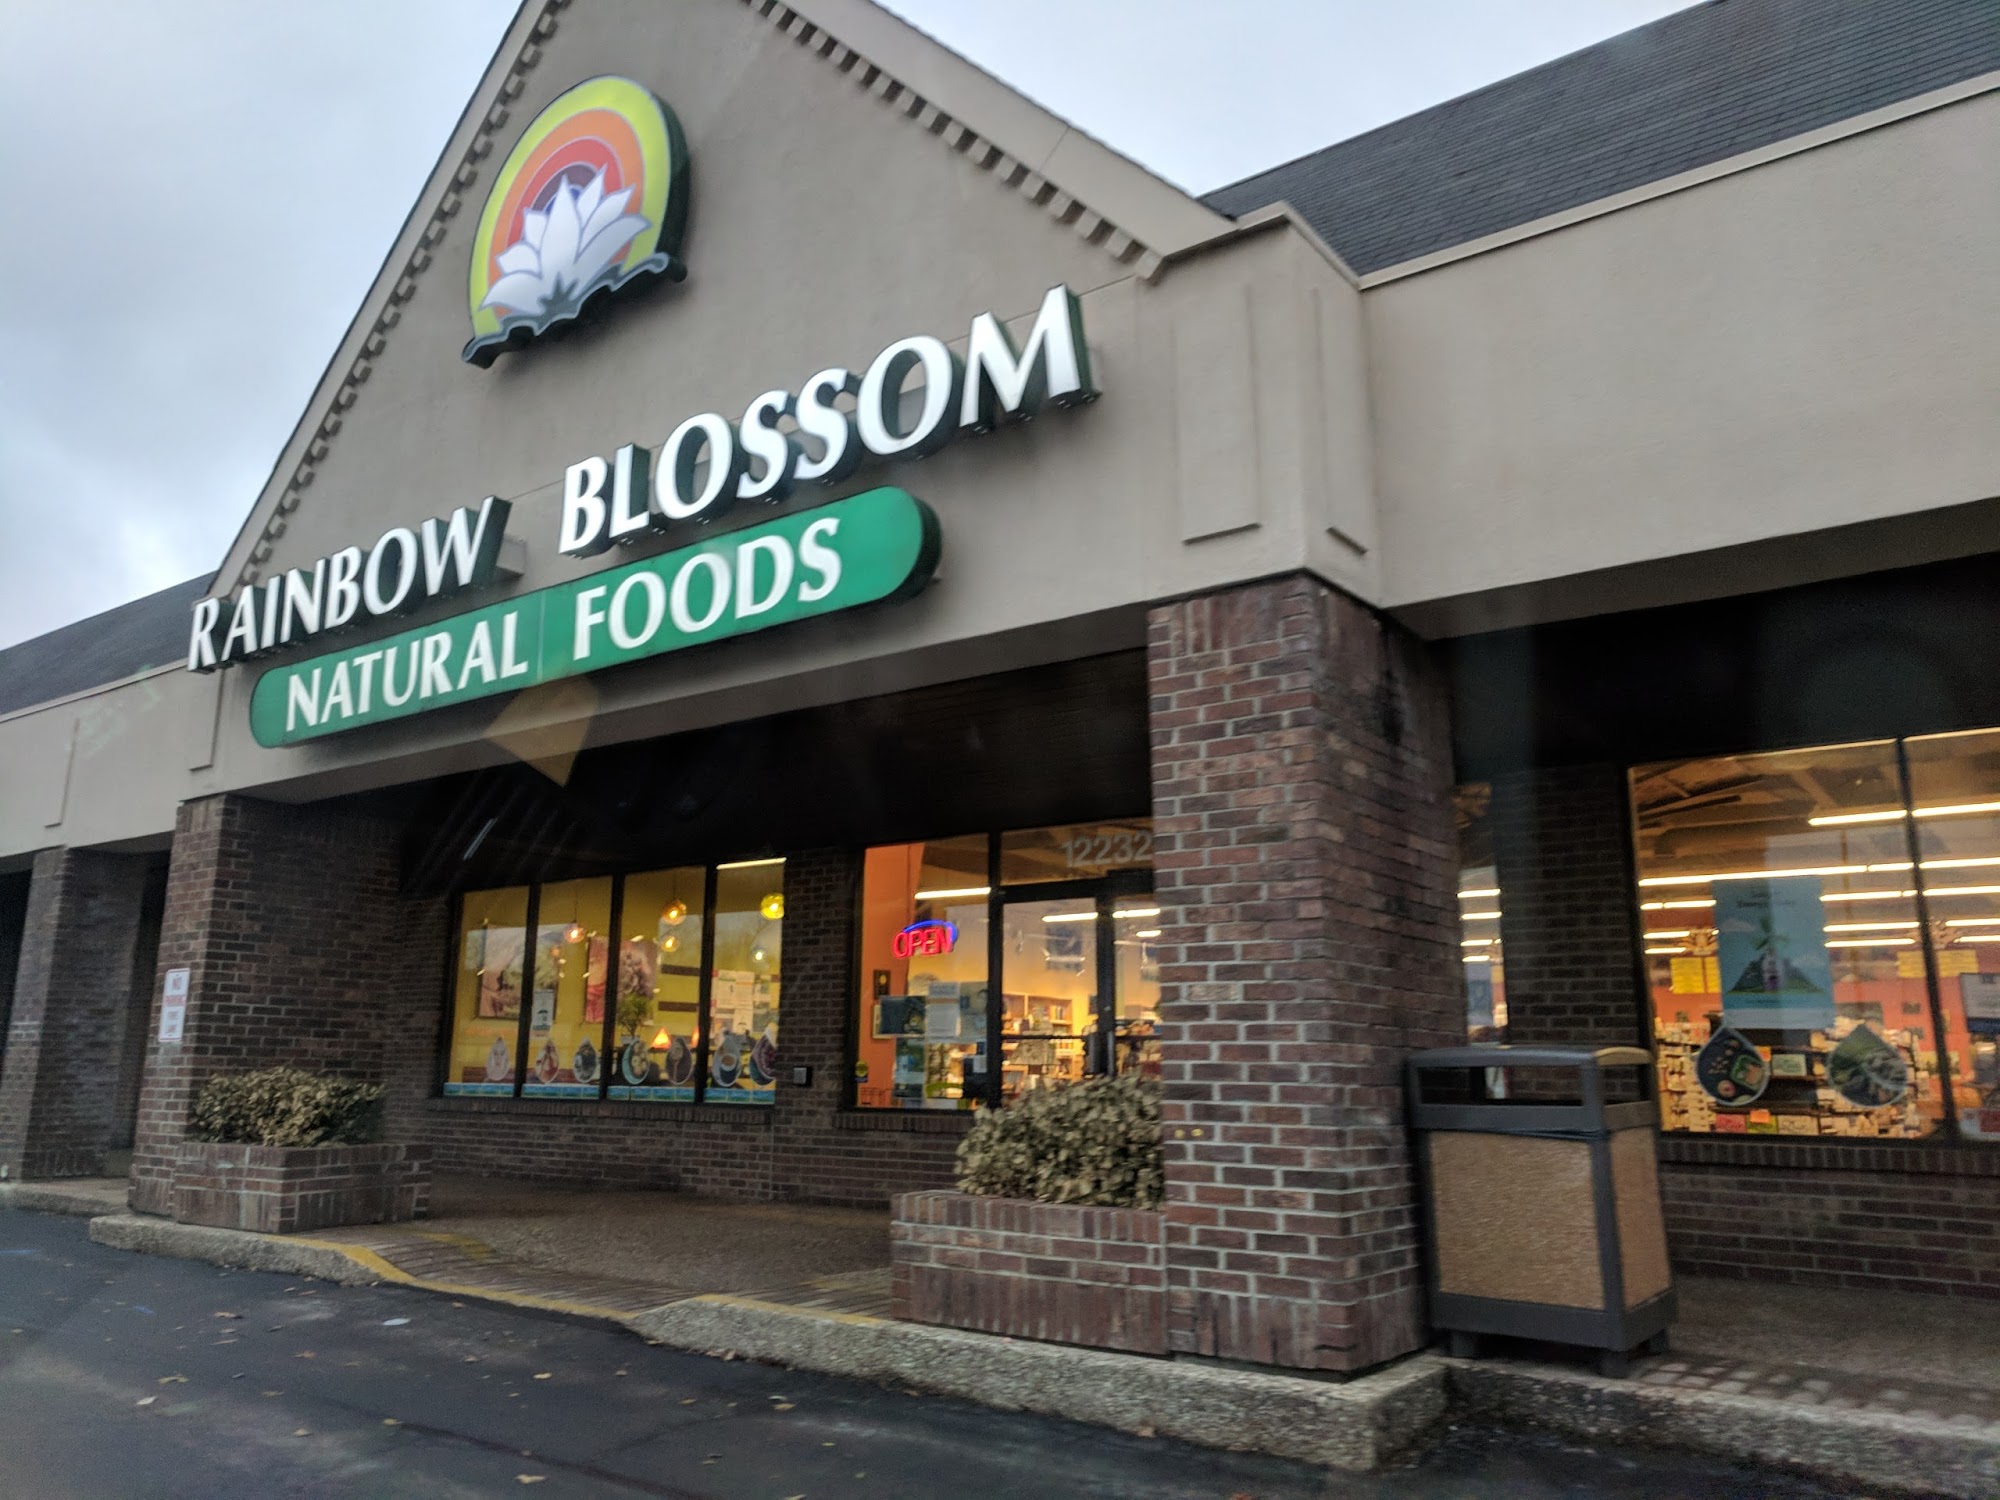 Rainbow Blossom Middletown